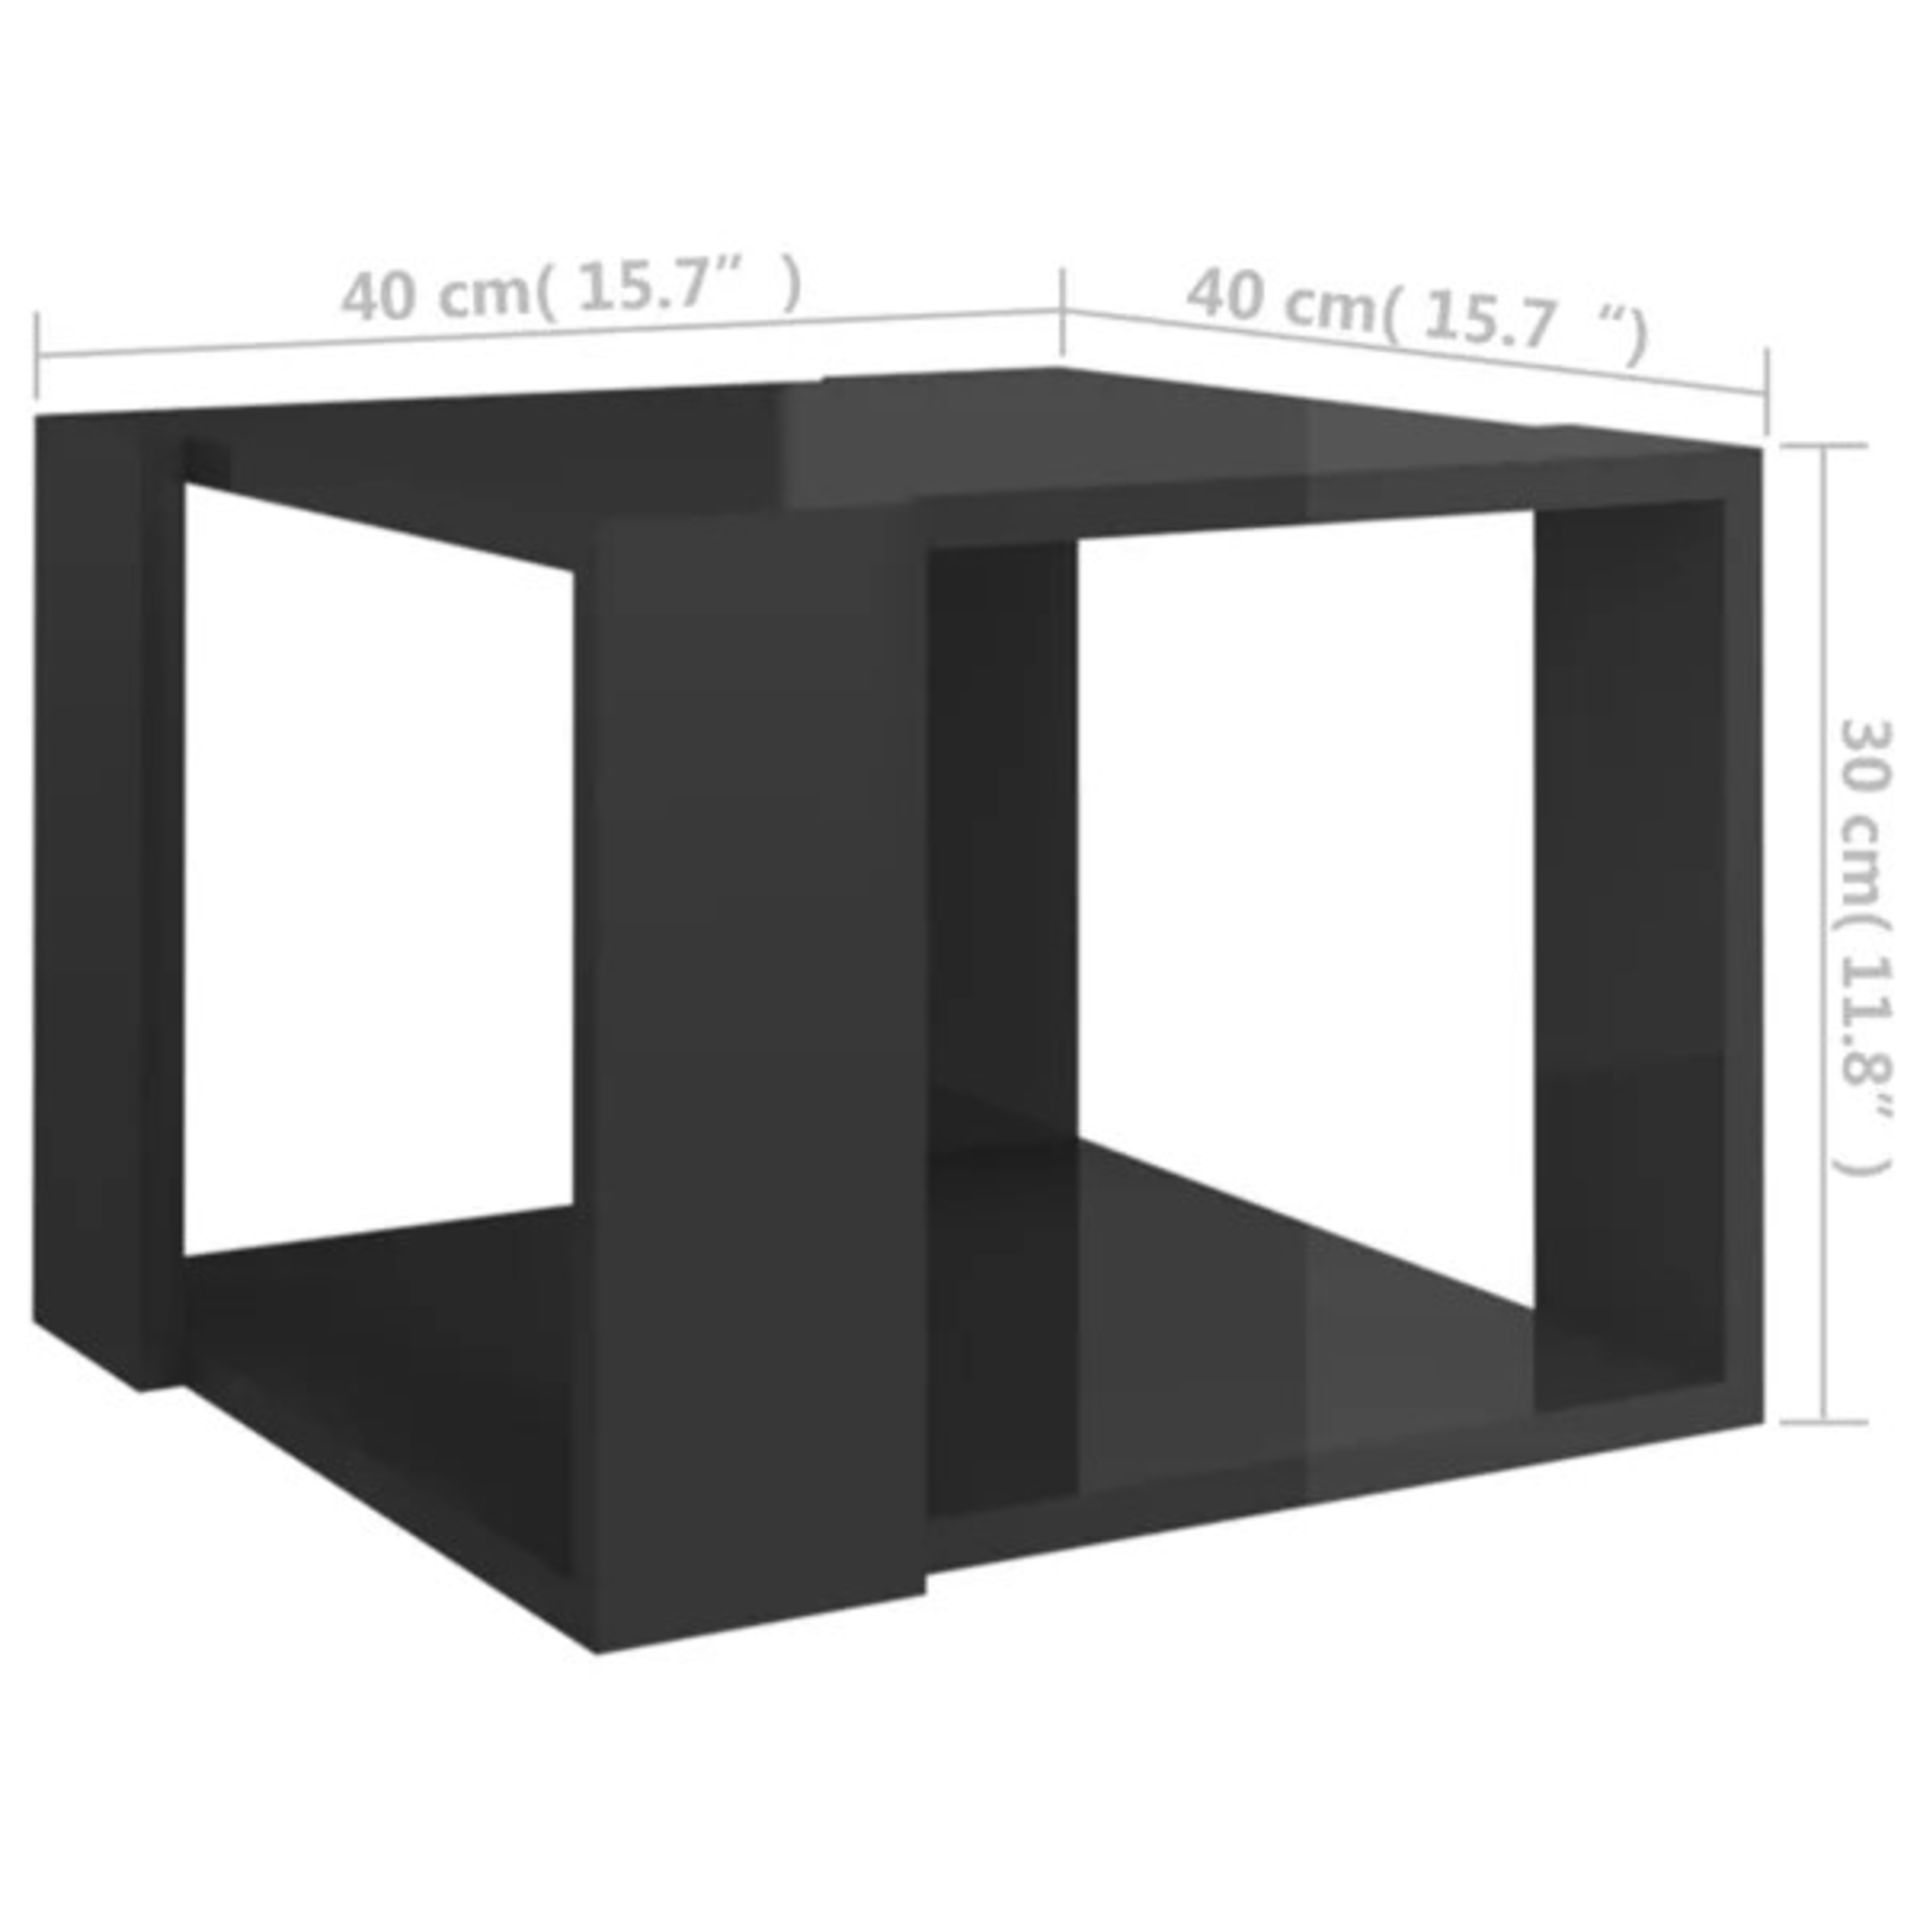 RRP £41.48 - Godbee Floor Shelf Coffee Table with Storage - Image 2 of 3